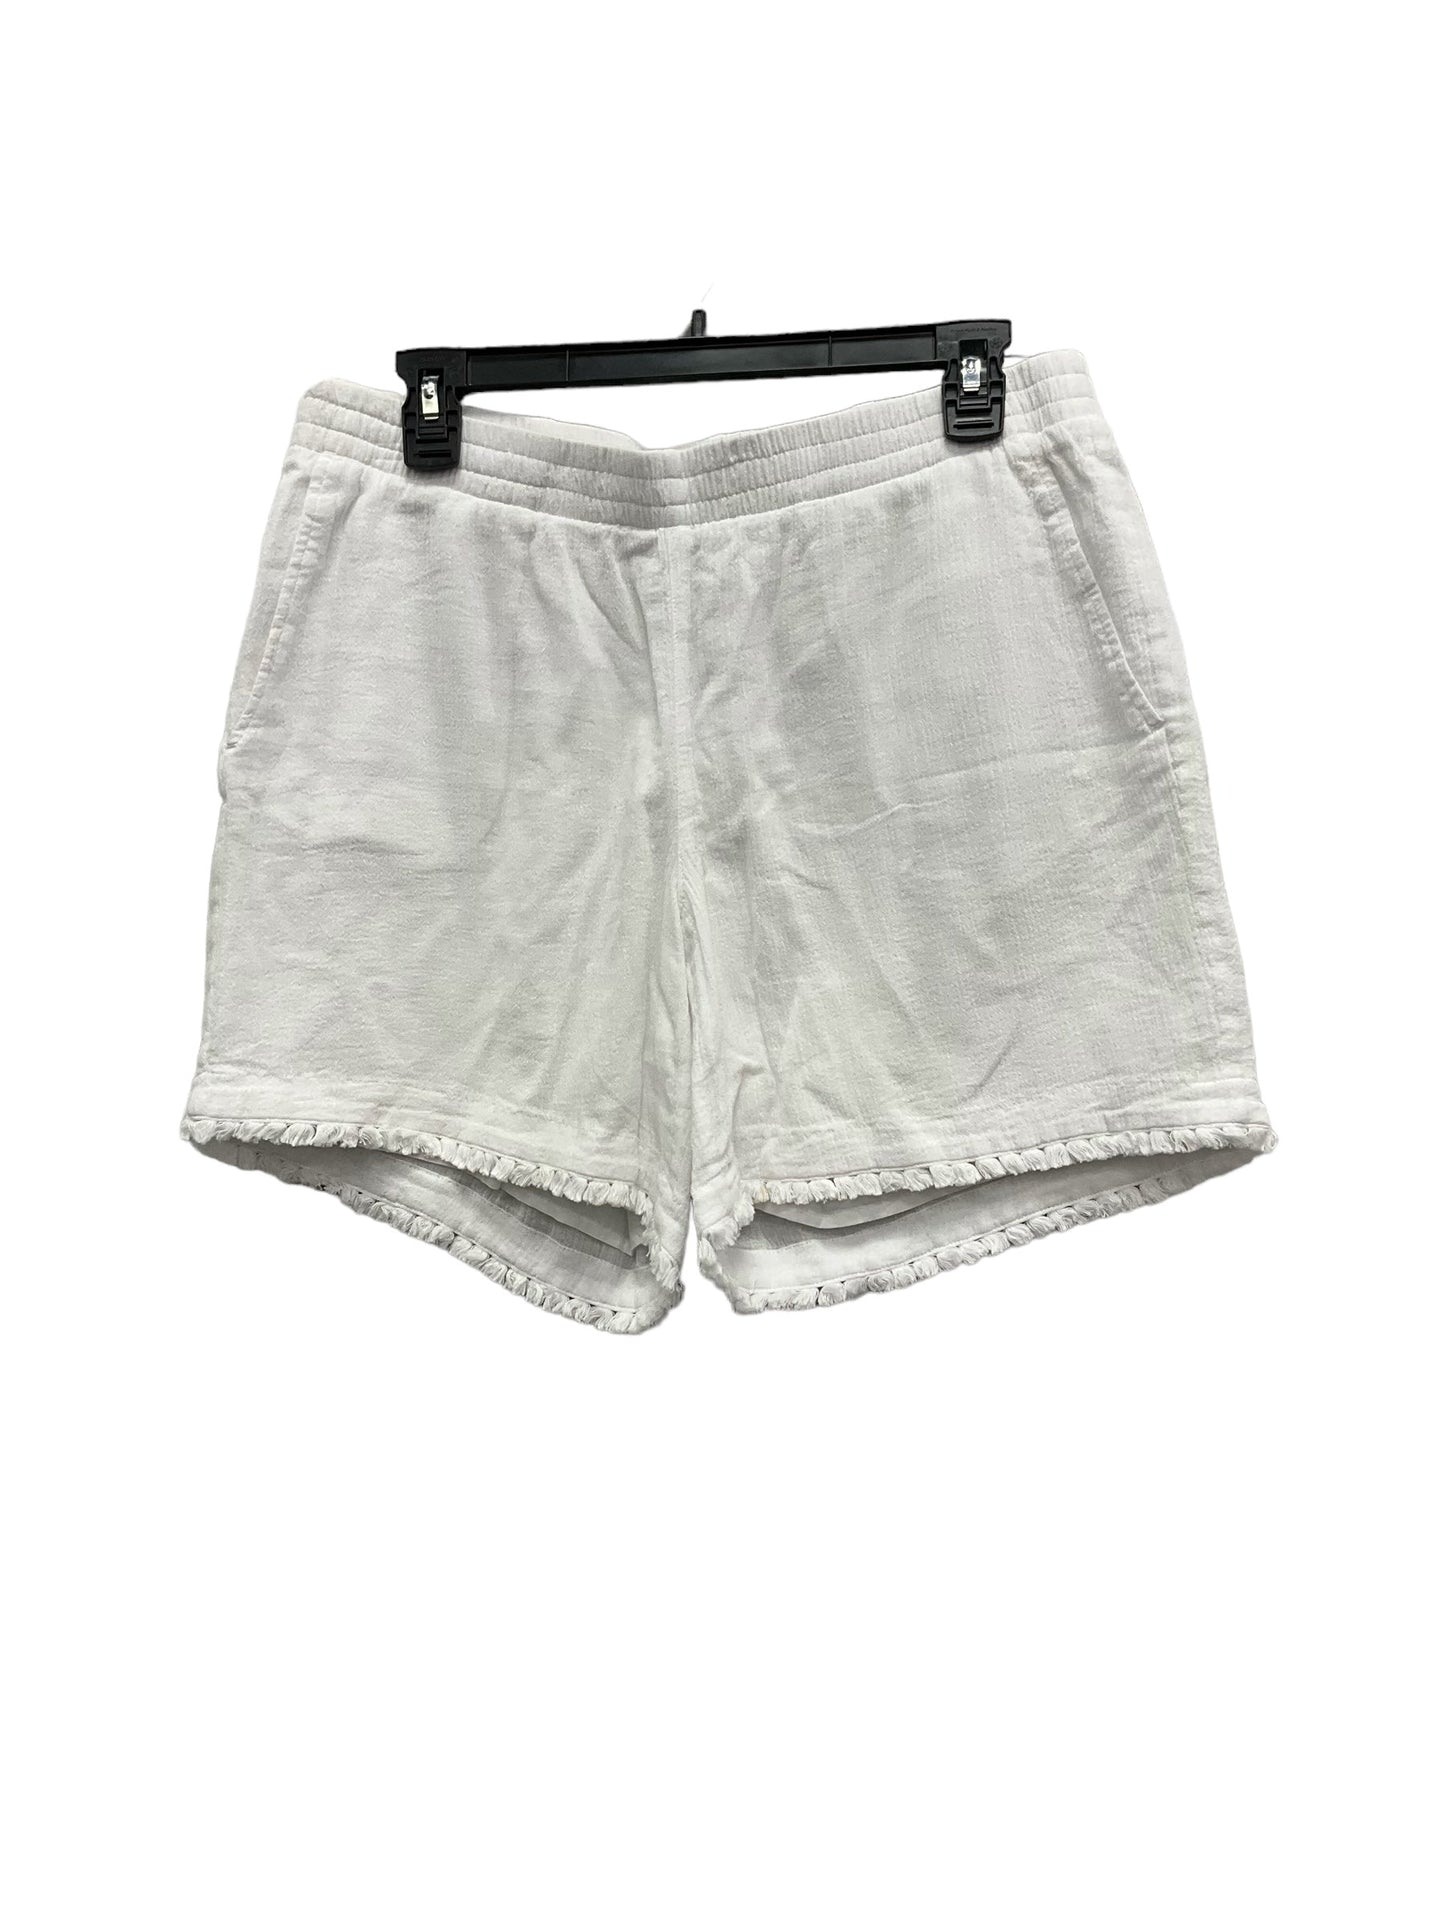 Shorts By J. Jill  Size: S